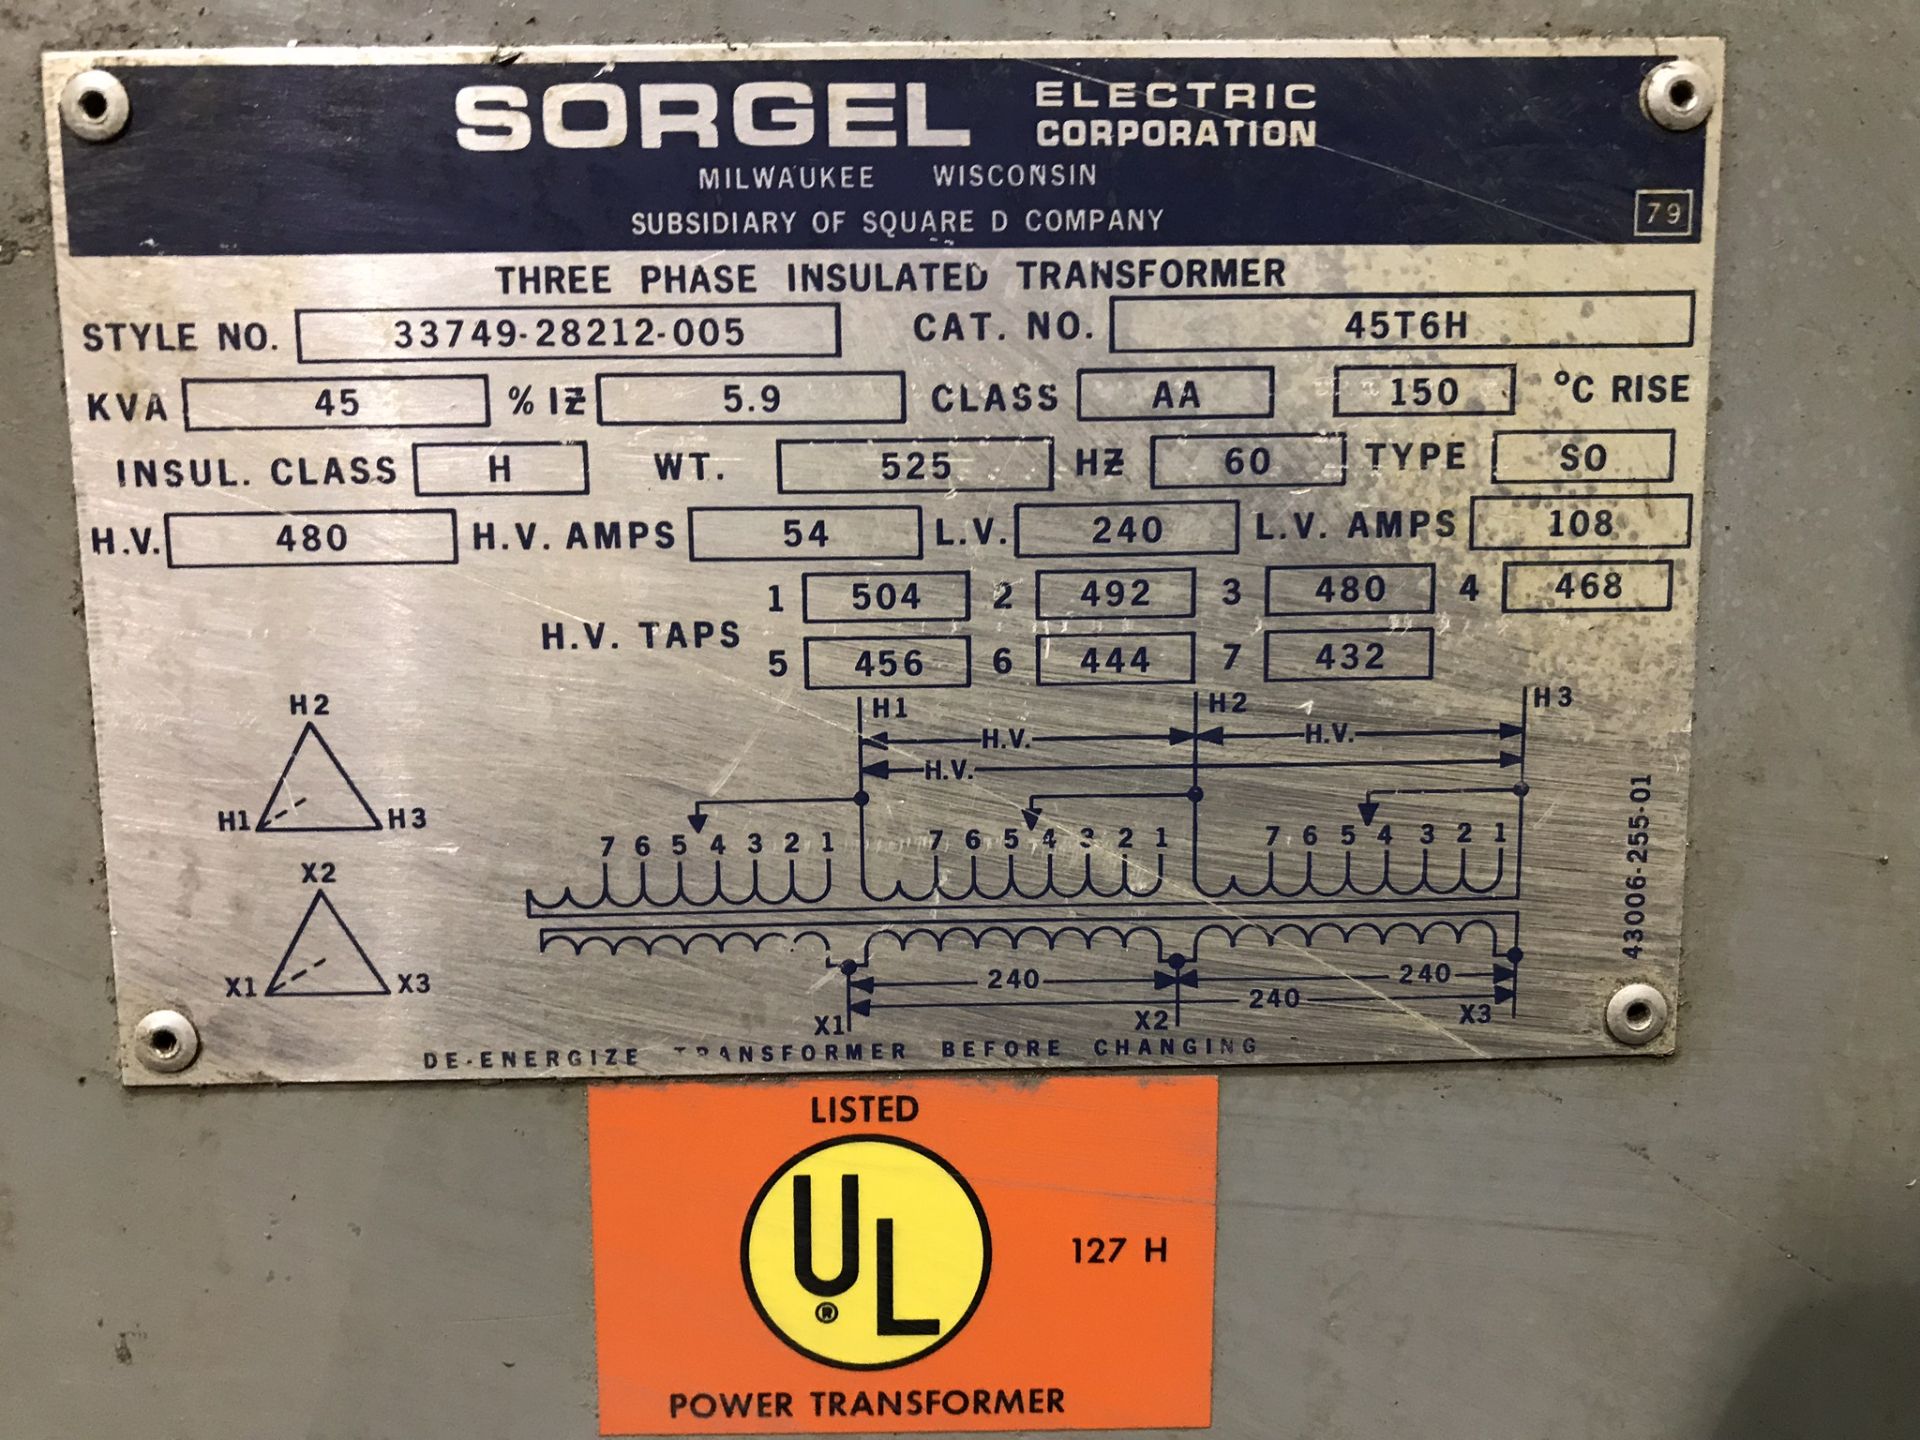 Sorgel 45 KVA Transformer, Catalog No. 45T6H, High Voltage 480 Volts, Low Voltage 240 Volts - Image 2 of 2